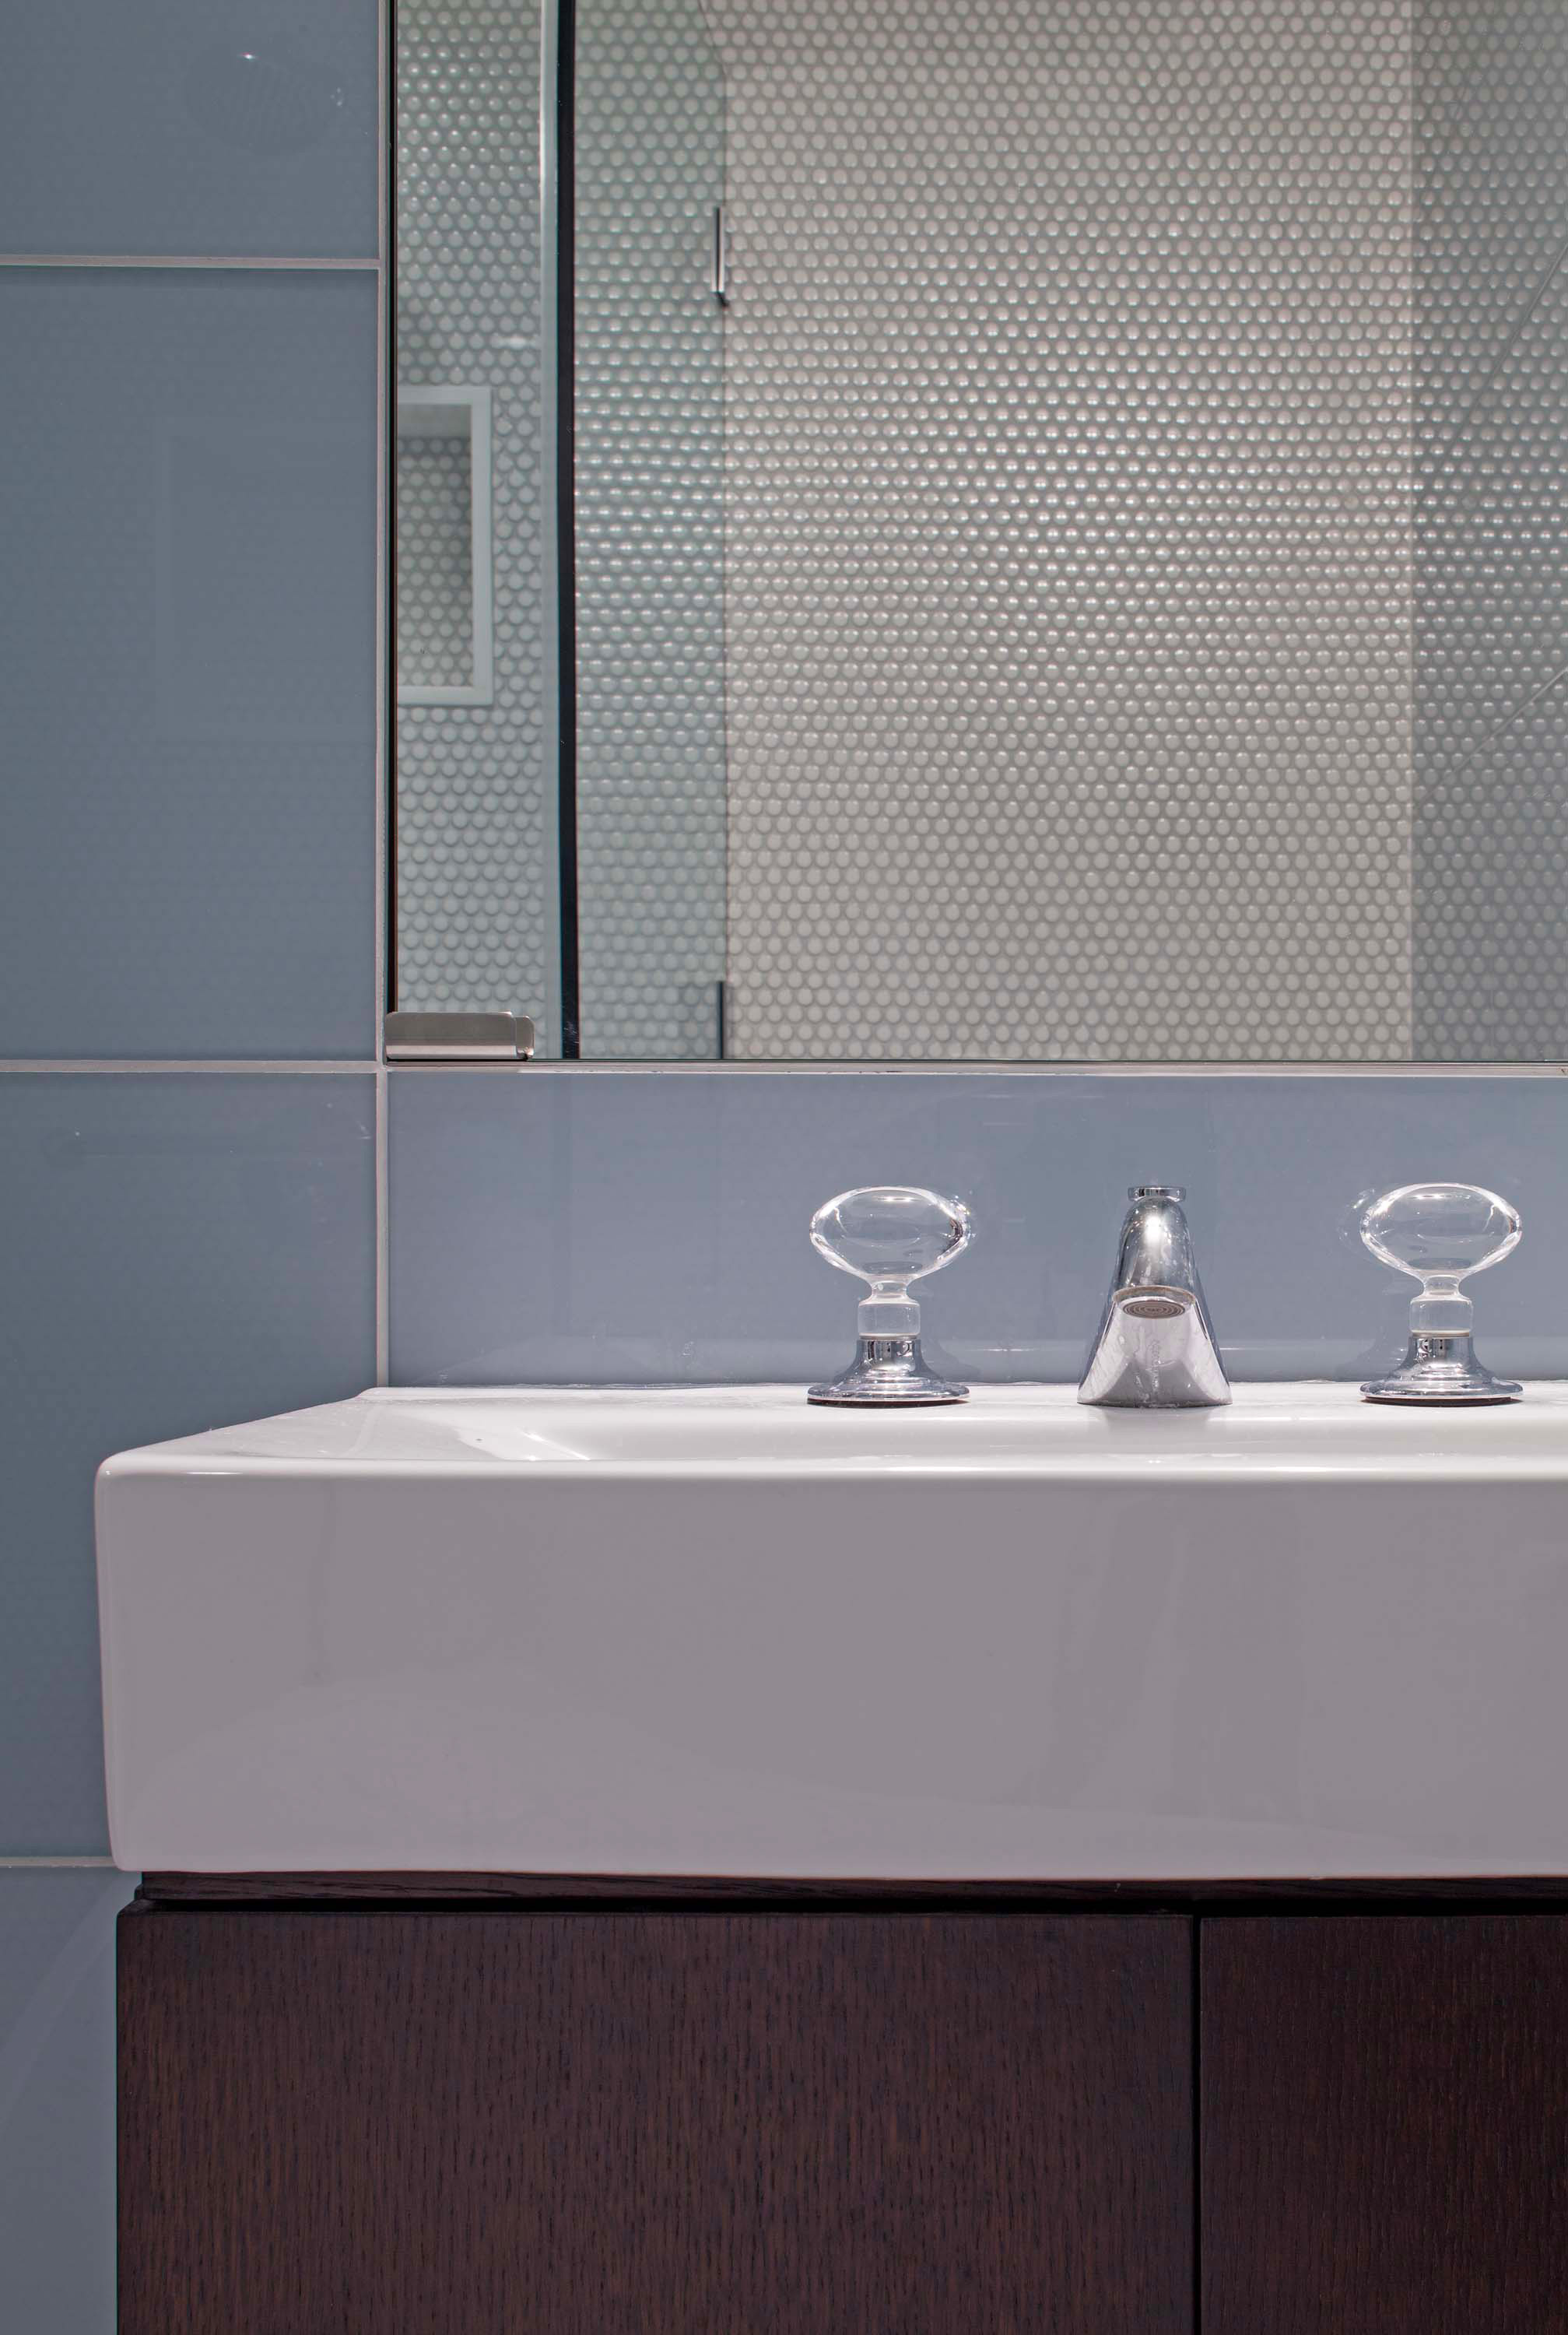 Bathroom detail shot of the Manhattan Microloft by Specht Novak Architects, shot by Taggart Sorensen.